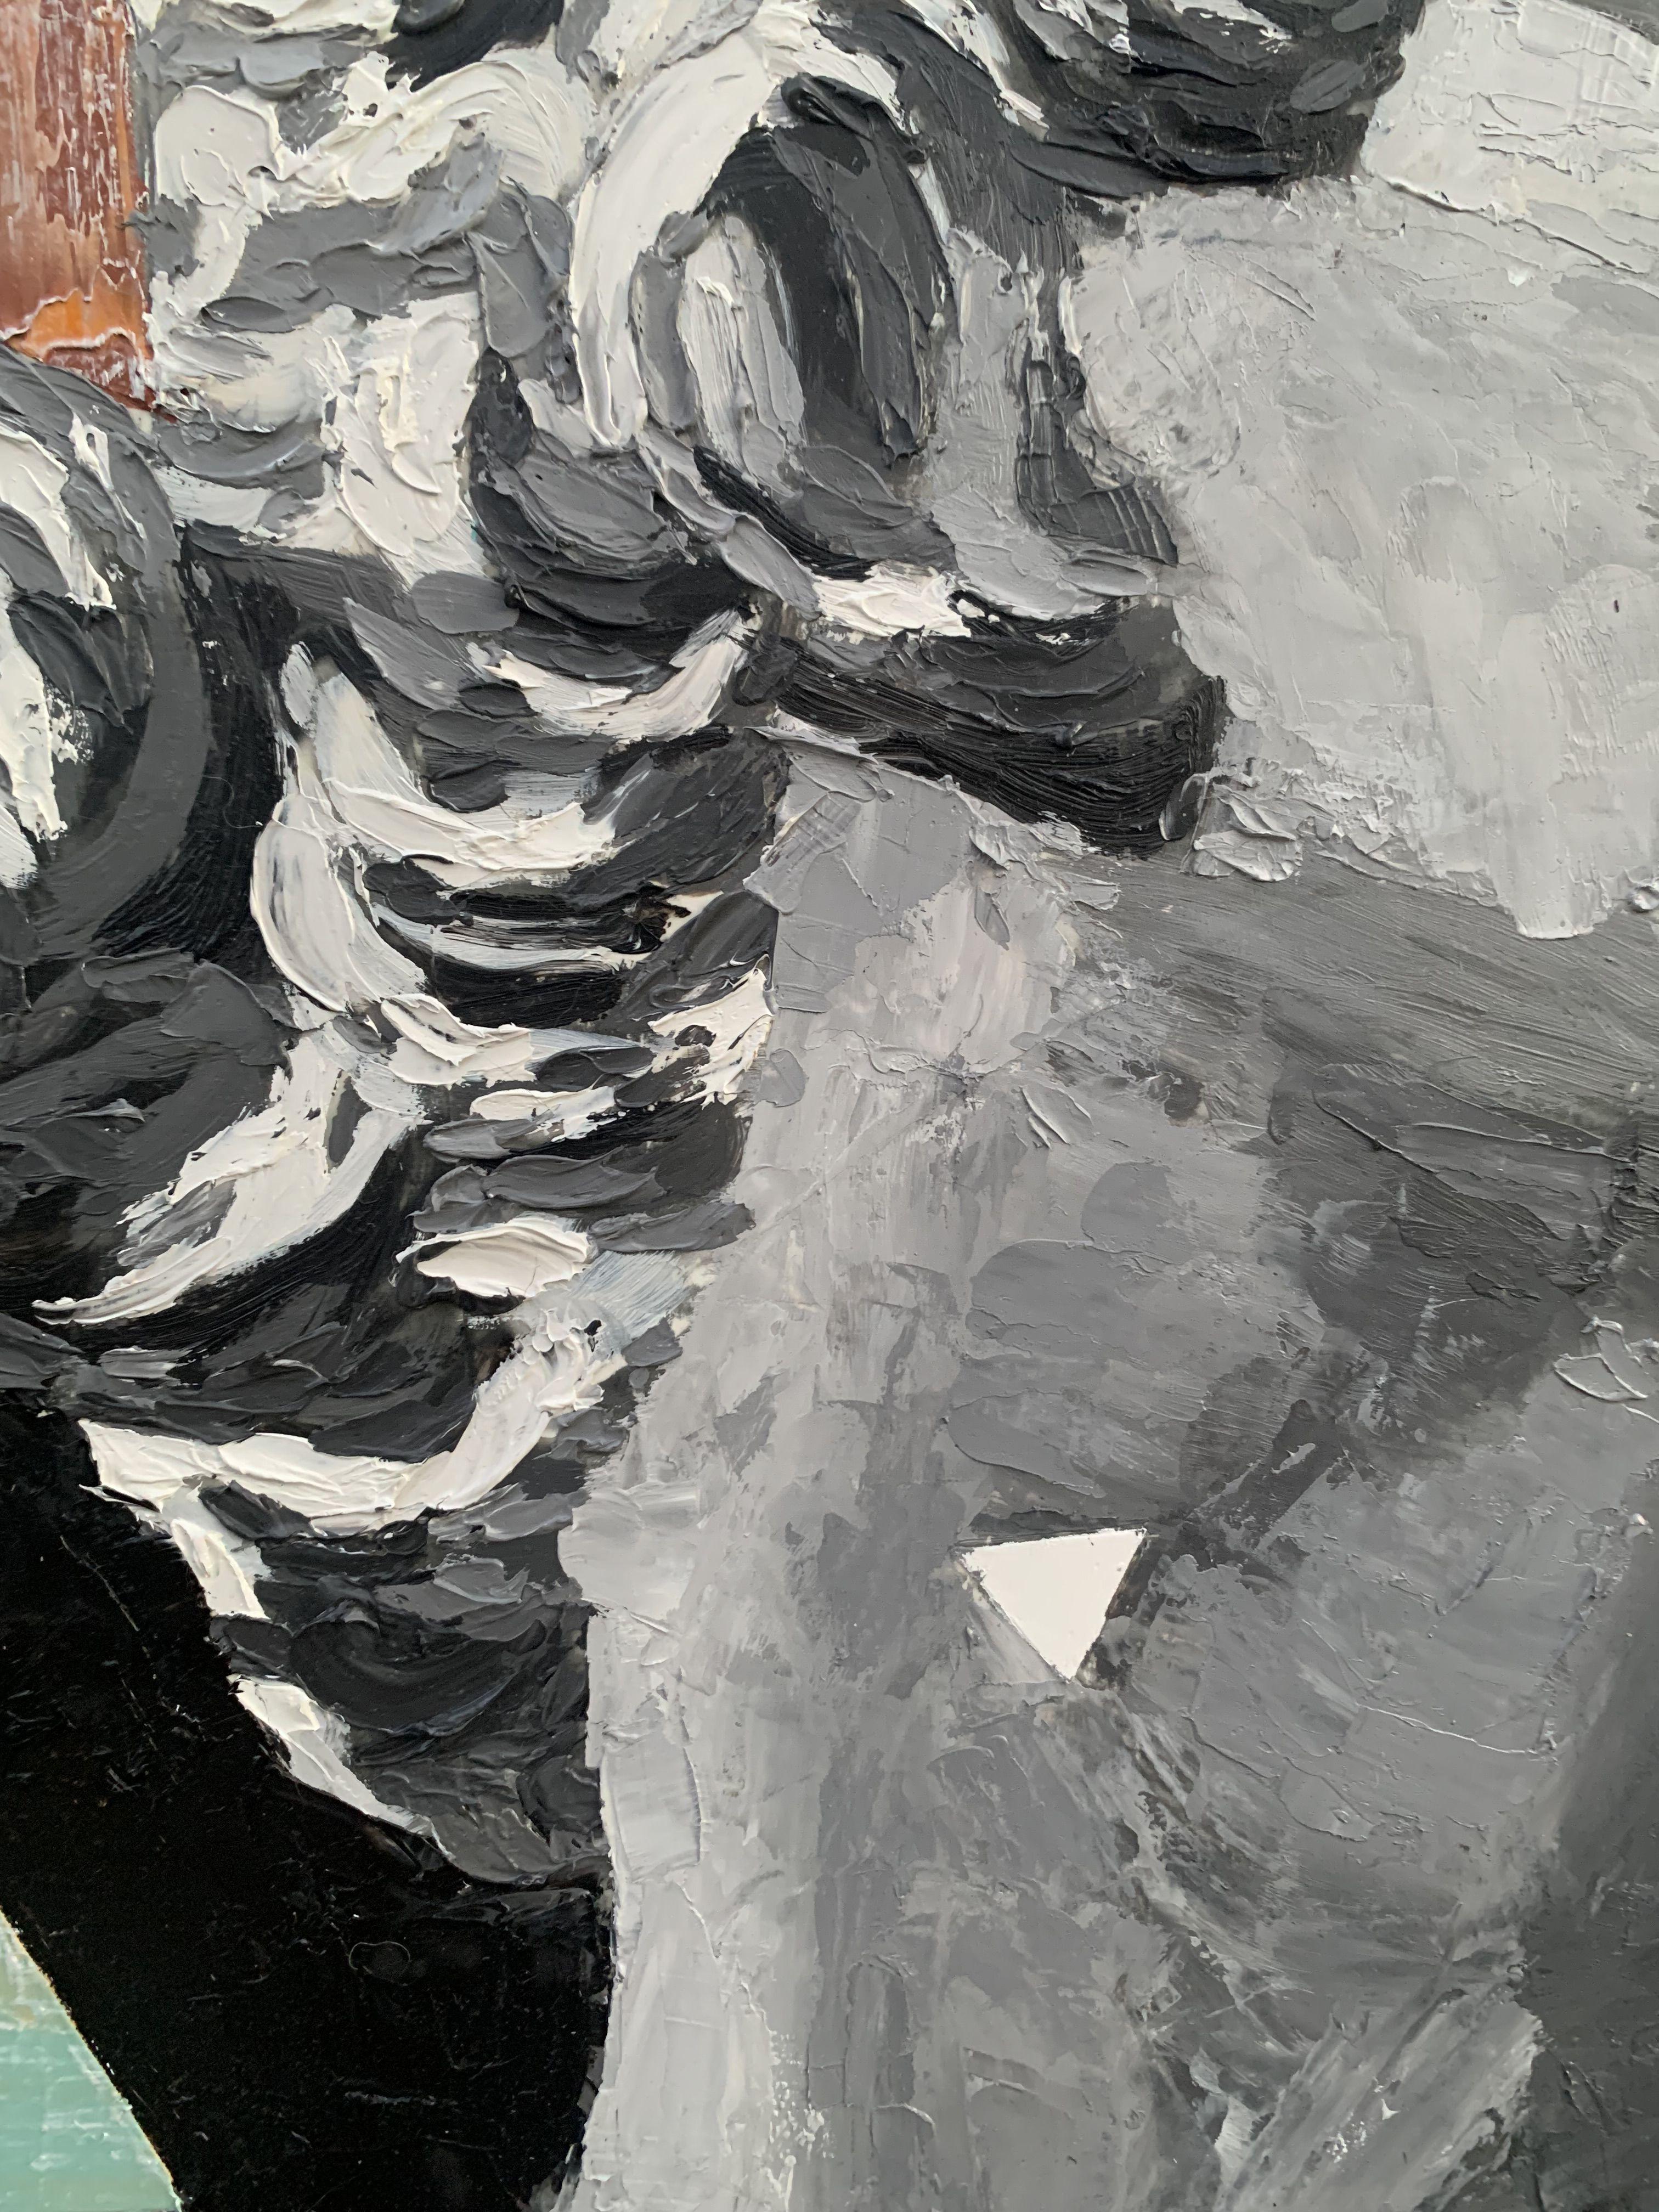 Venus De Milo, Painting, Oil on Wood Panel - Gray Abstract Painting by Julia Niiazbekova